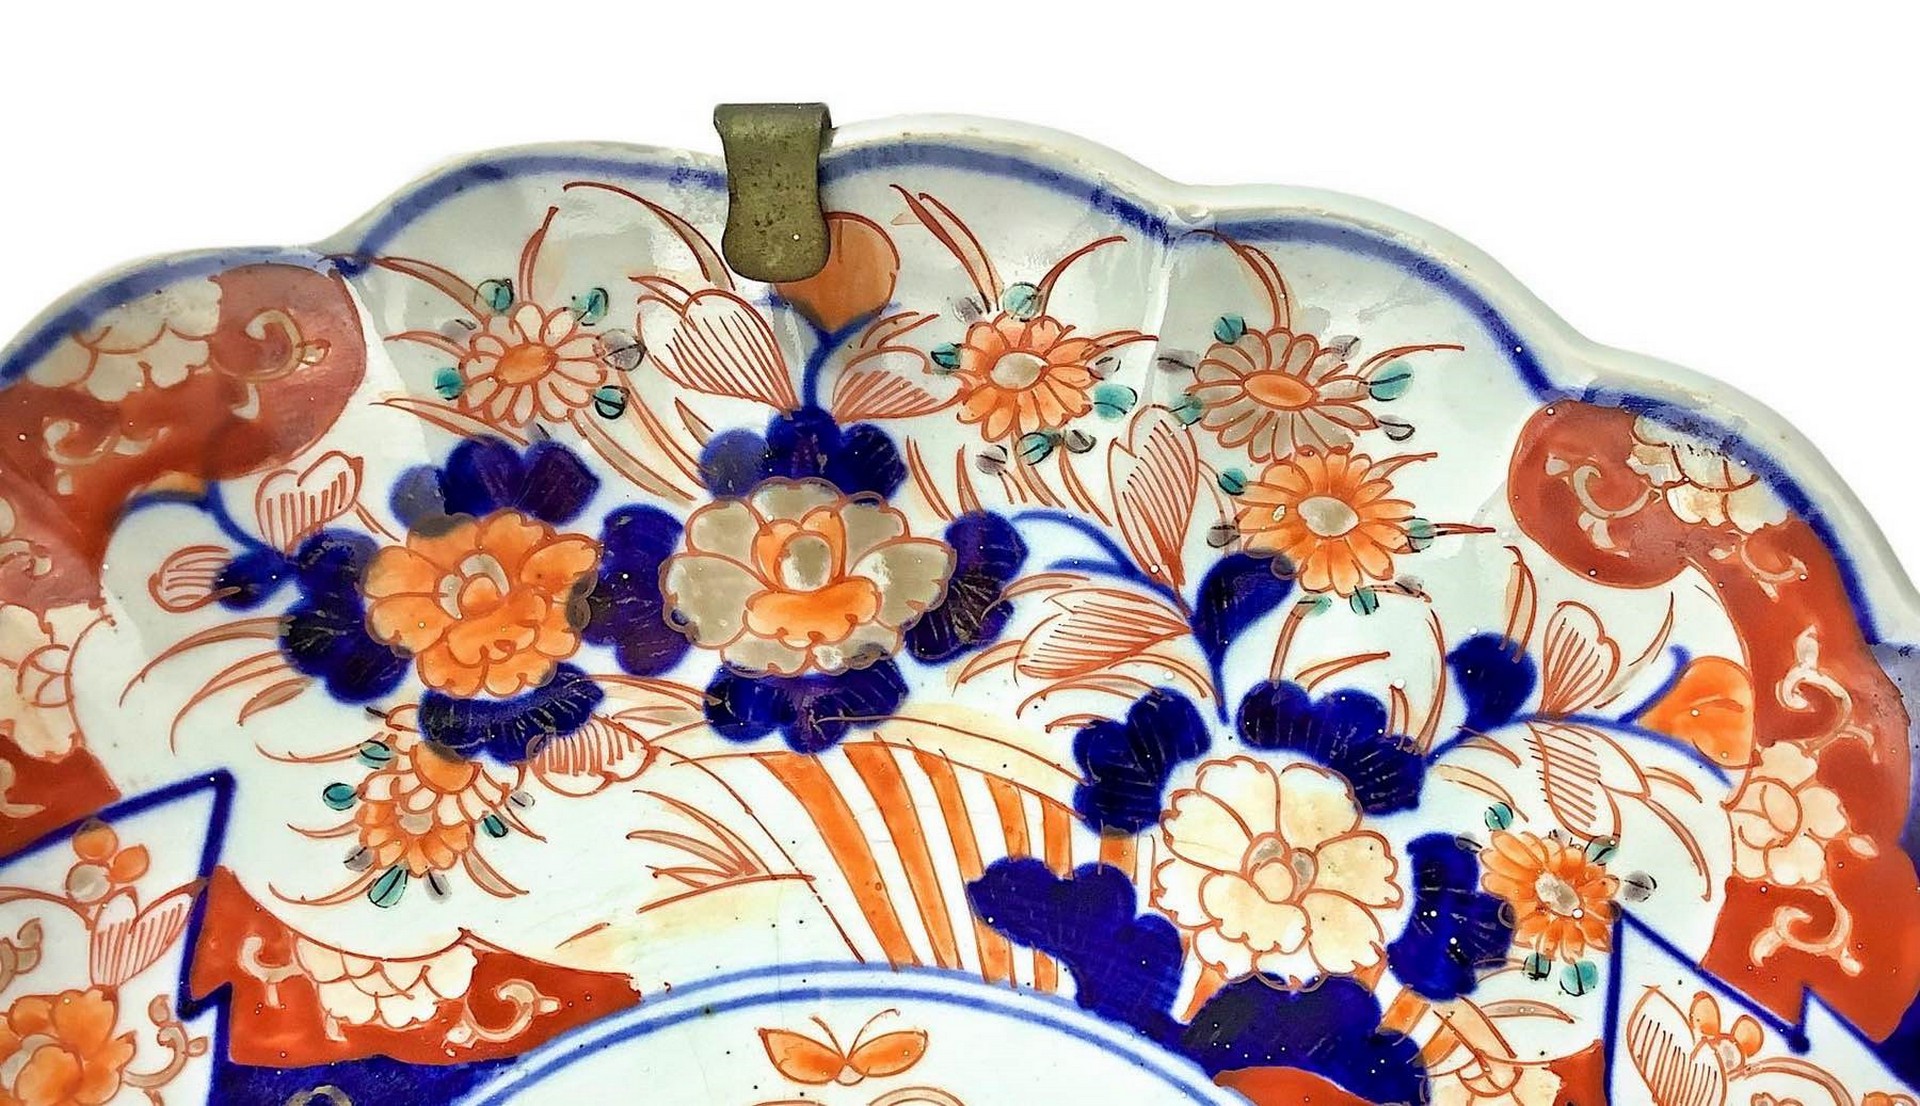 Imari porcelain plate, XVIII century - Image 2 of 3